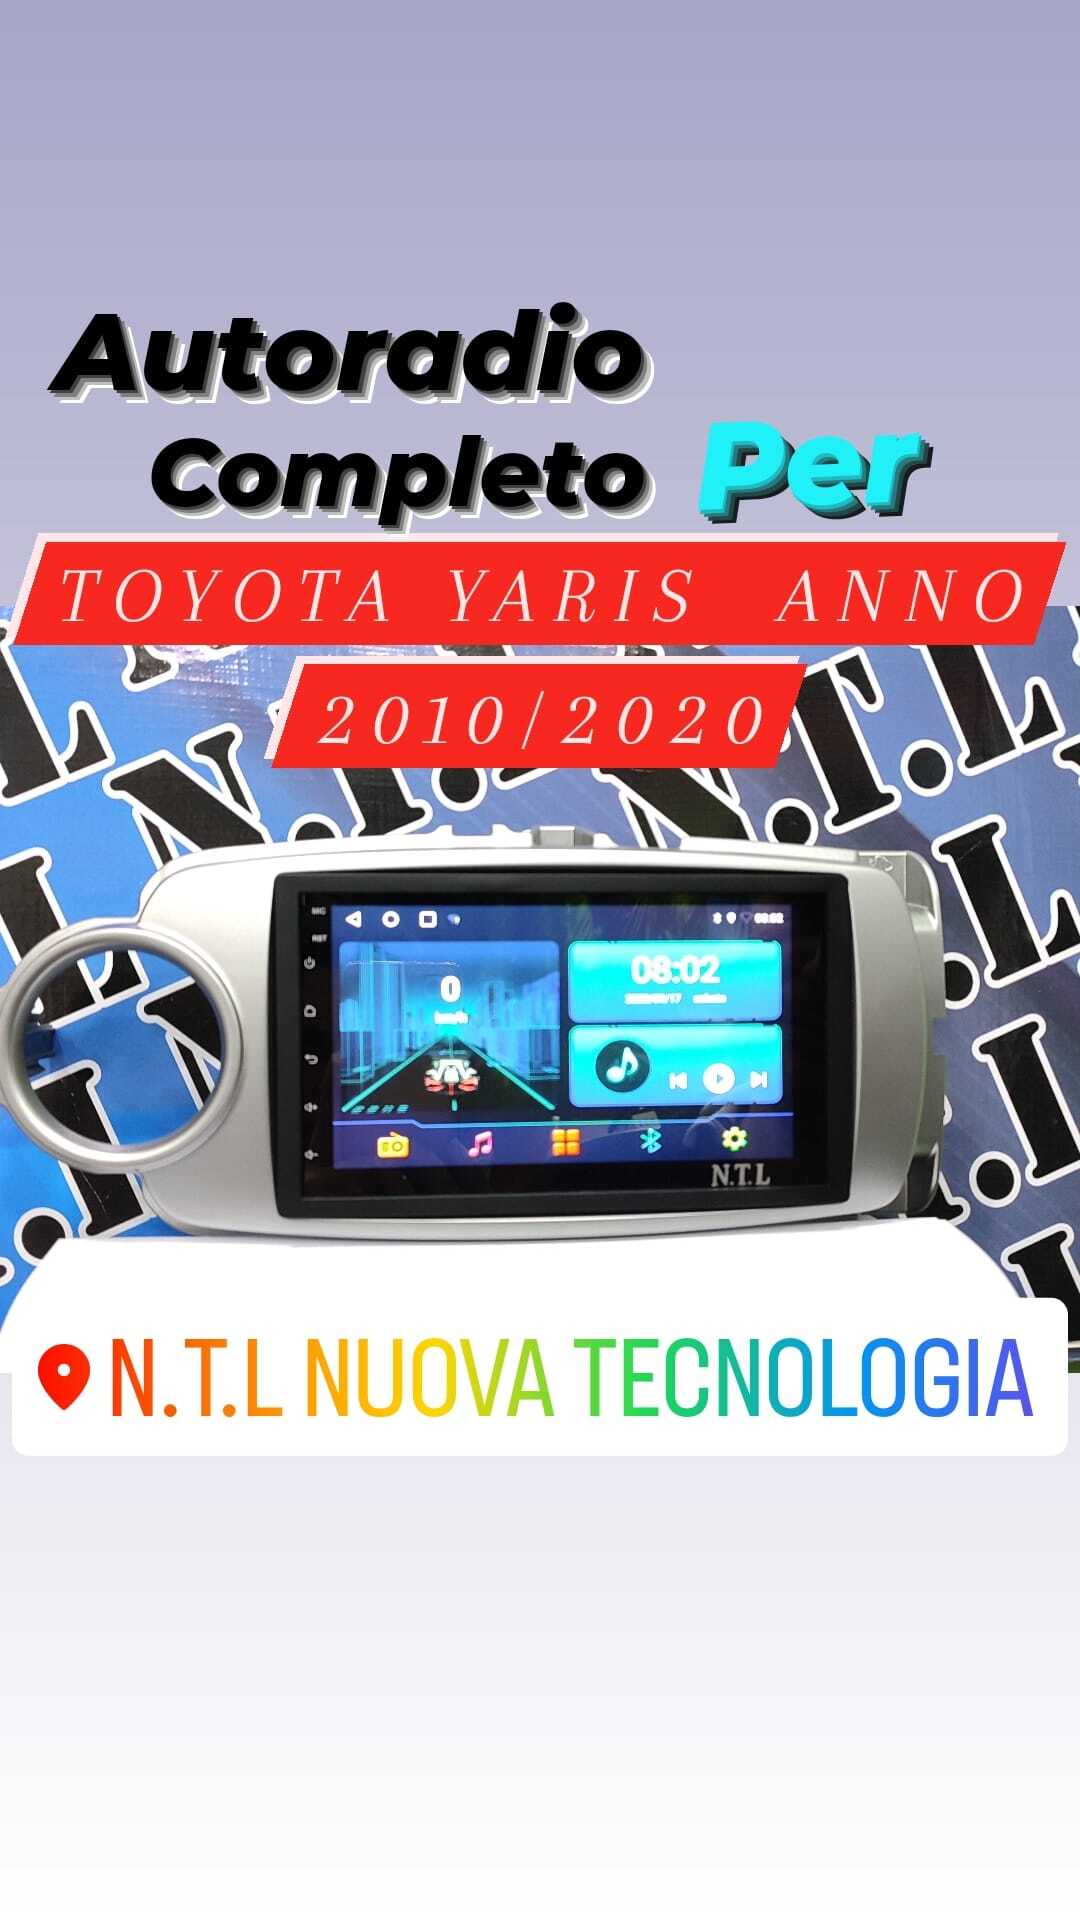 AUTORADIO ANDROID 10 completo PER TOYOTA YARIS - NTL Nuova Tecnologia